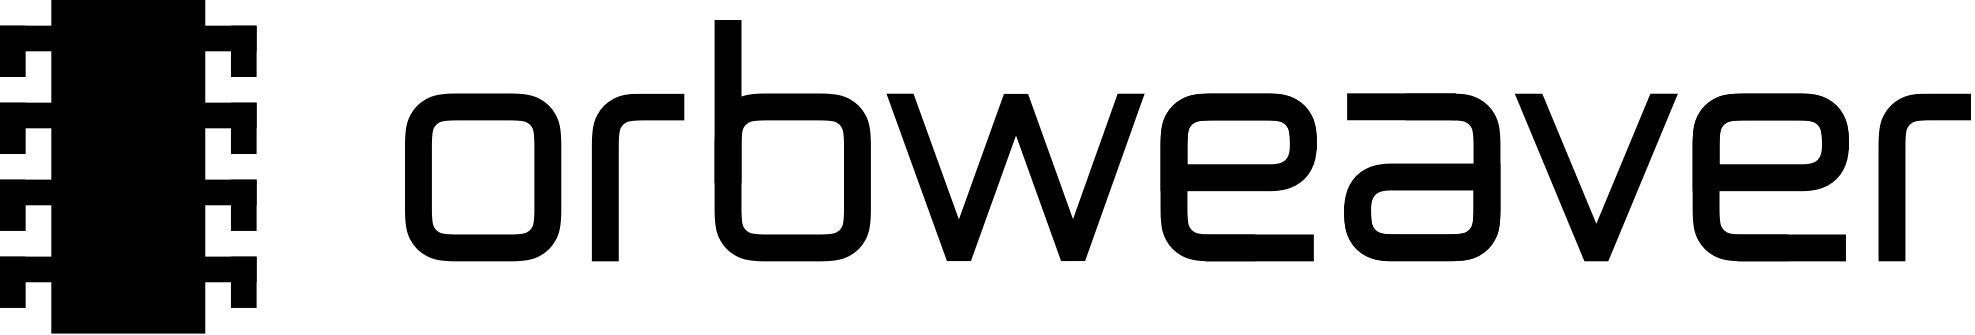 Orbweaver logo